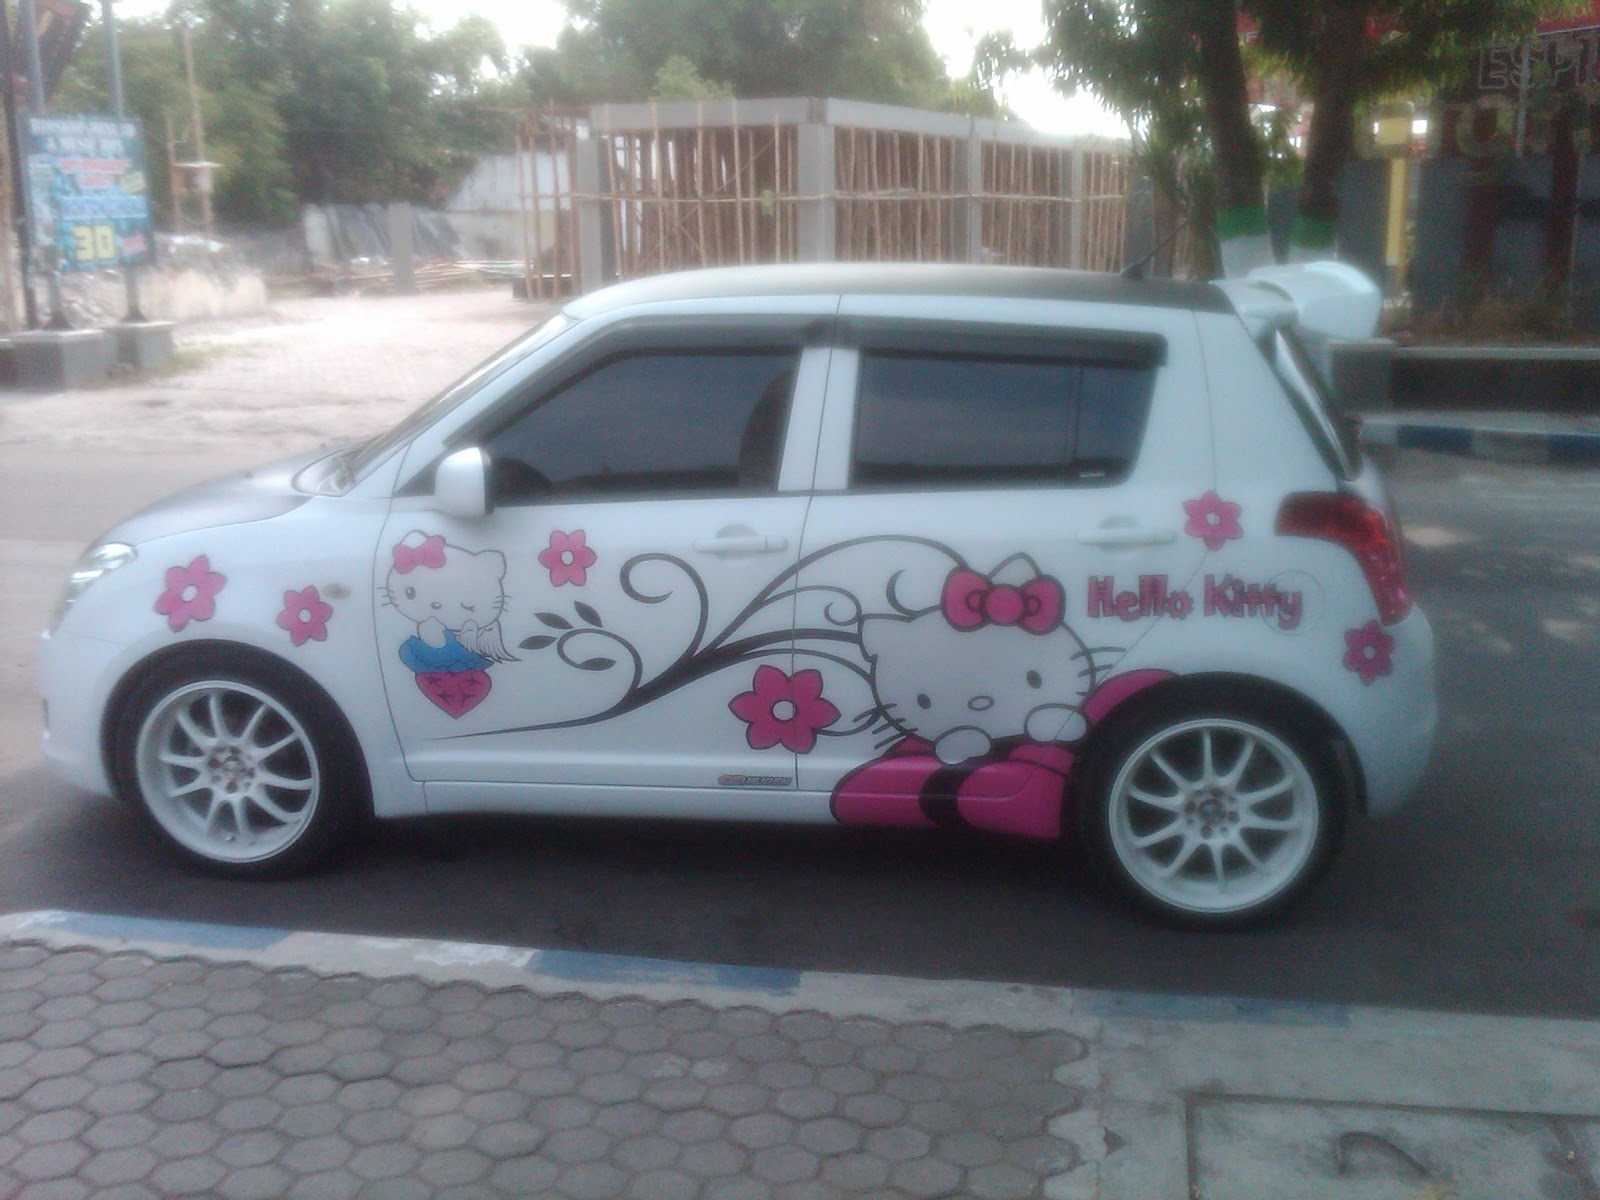 Foto Mobil Hello Kitty Terbaru Kawan Modifikasi